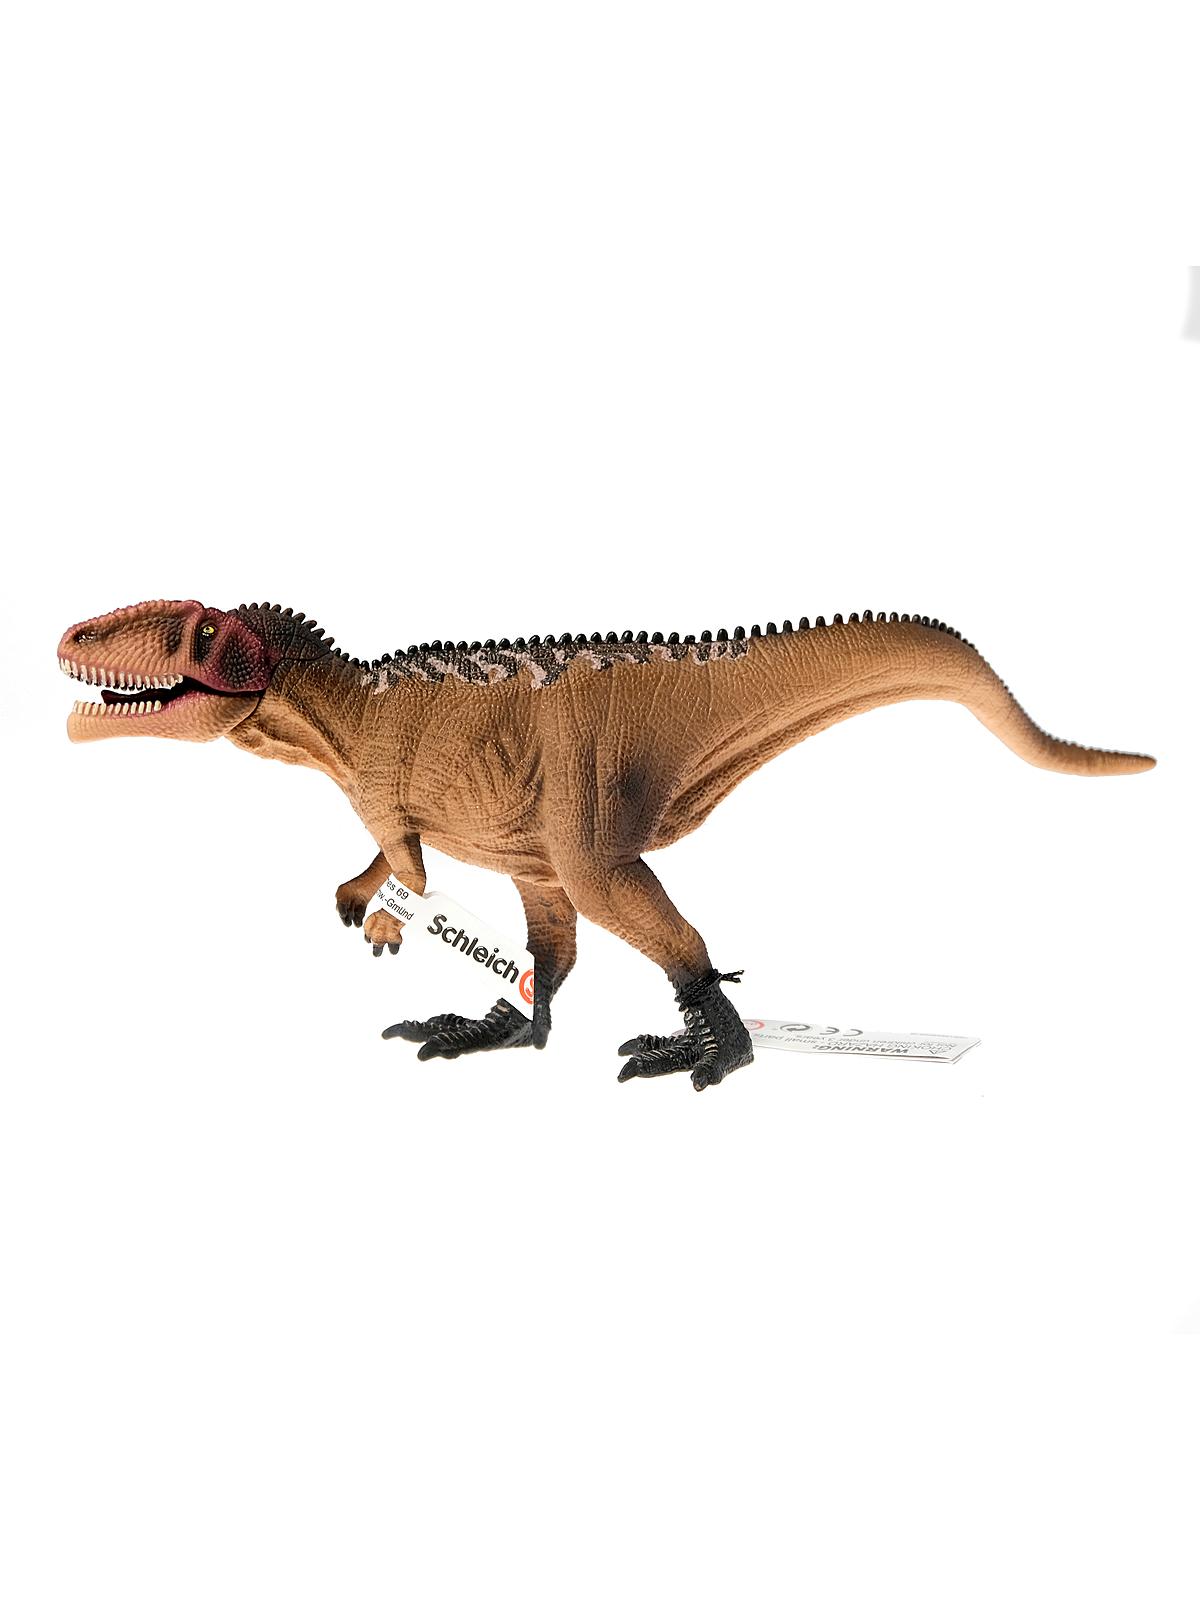 Gigantosaurus, Juvenile